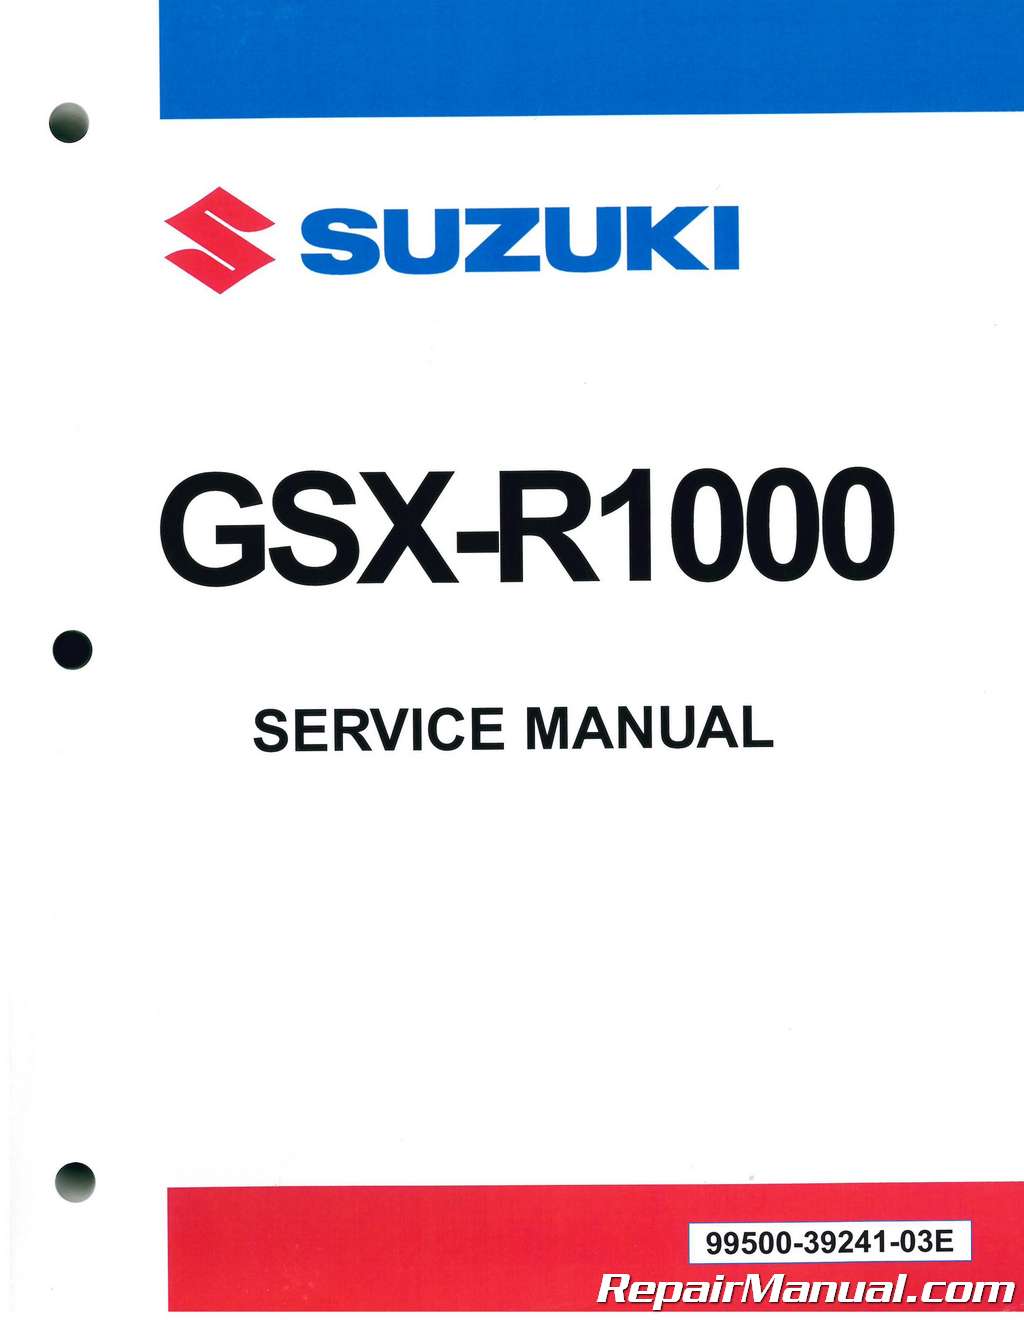 Manual Haynes for 2003 Suzuki GSX-R 1000 K3 